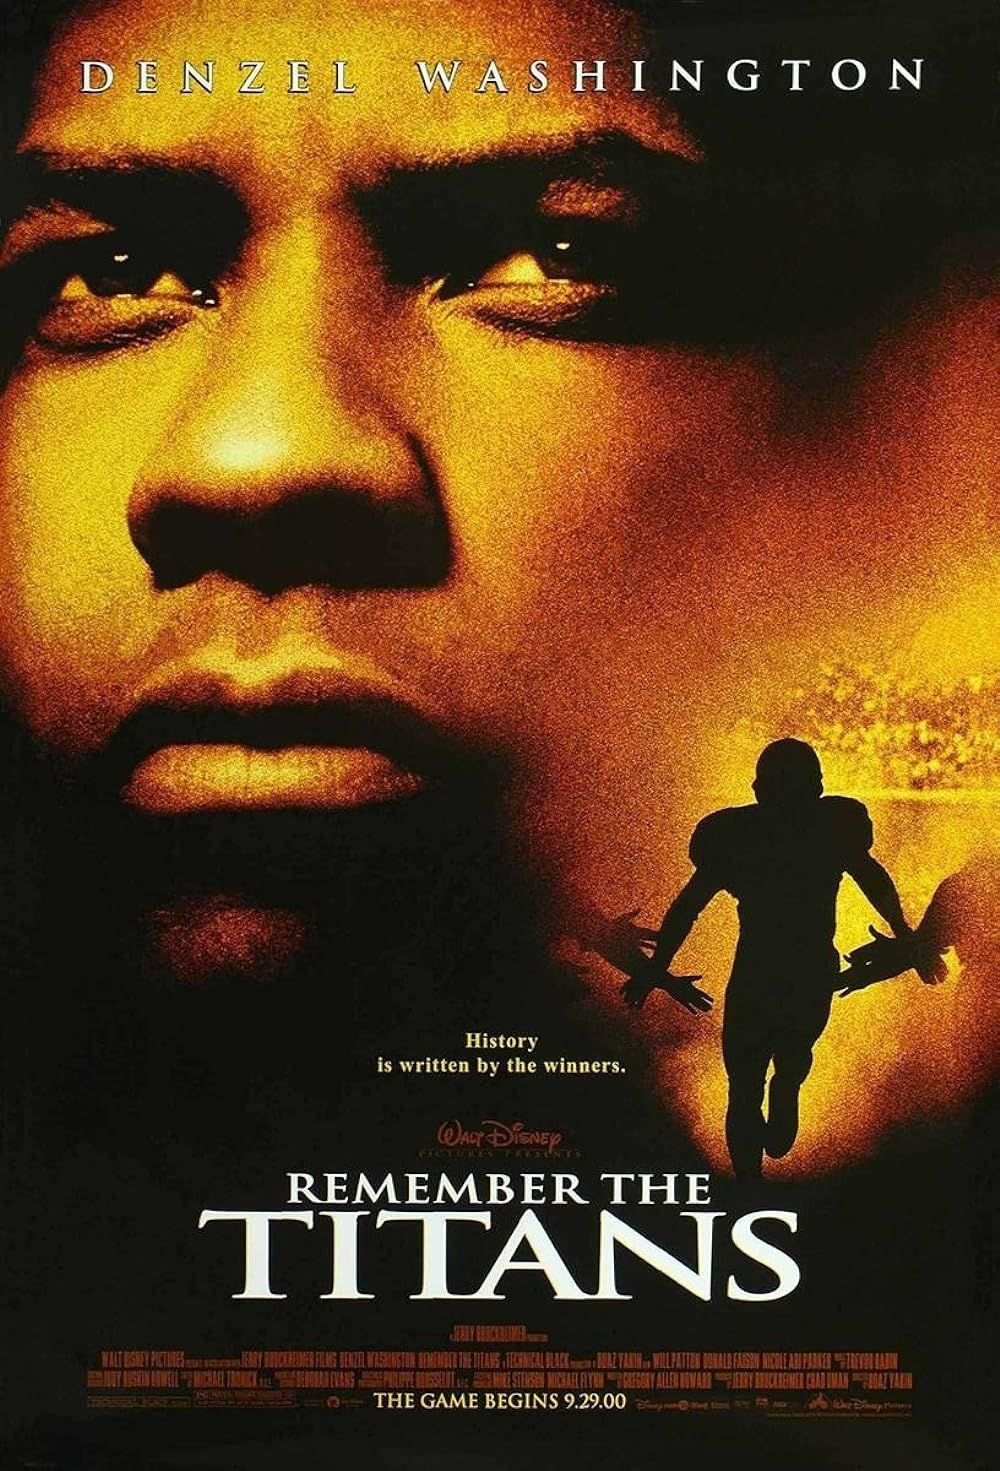 Denzel Washington in Remember the Titans